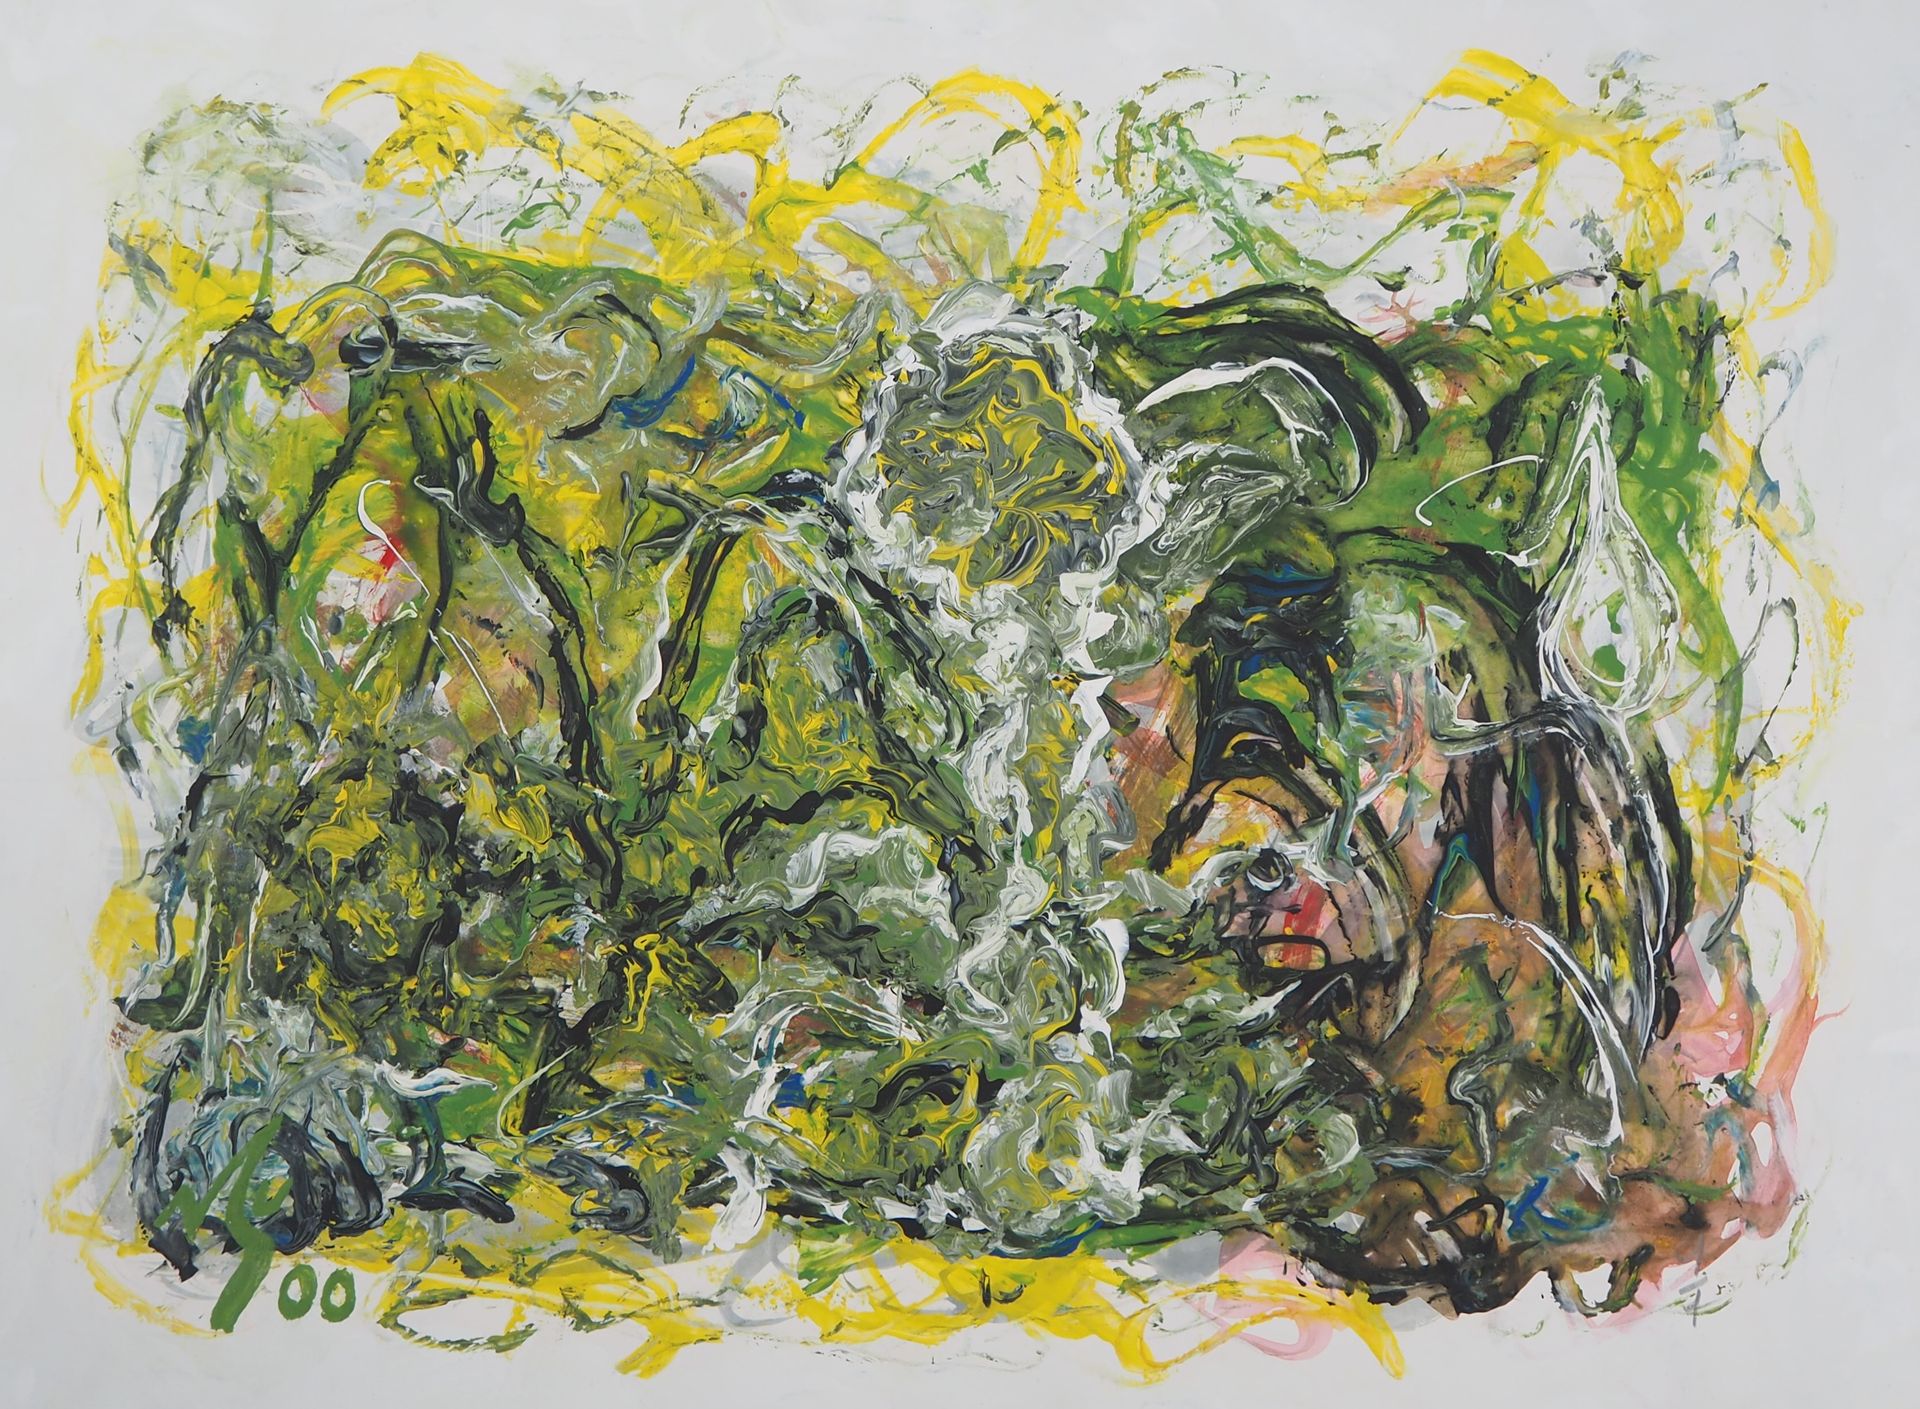 Michel GUIGNARD Michel Guignard

森林中的人物，2000年

丙烯酸和水粉画原作

左下方有艺术家的签名和日期

背面反签

在&hellip;